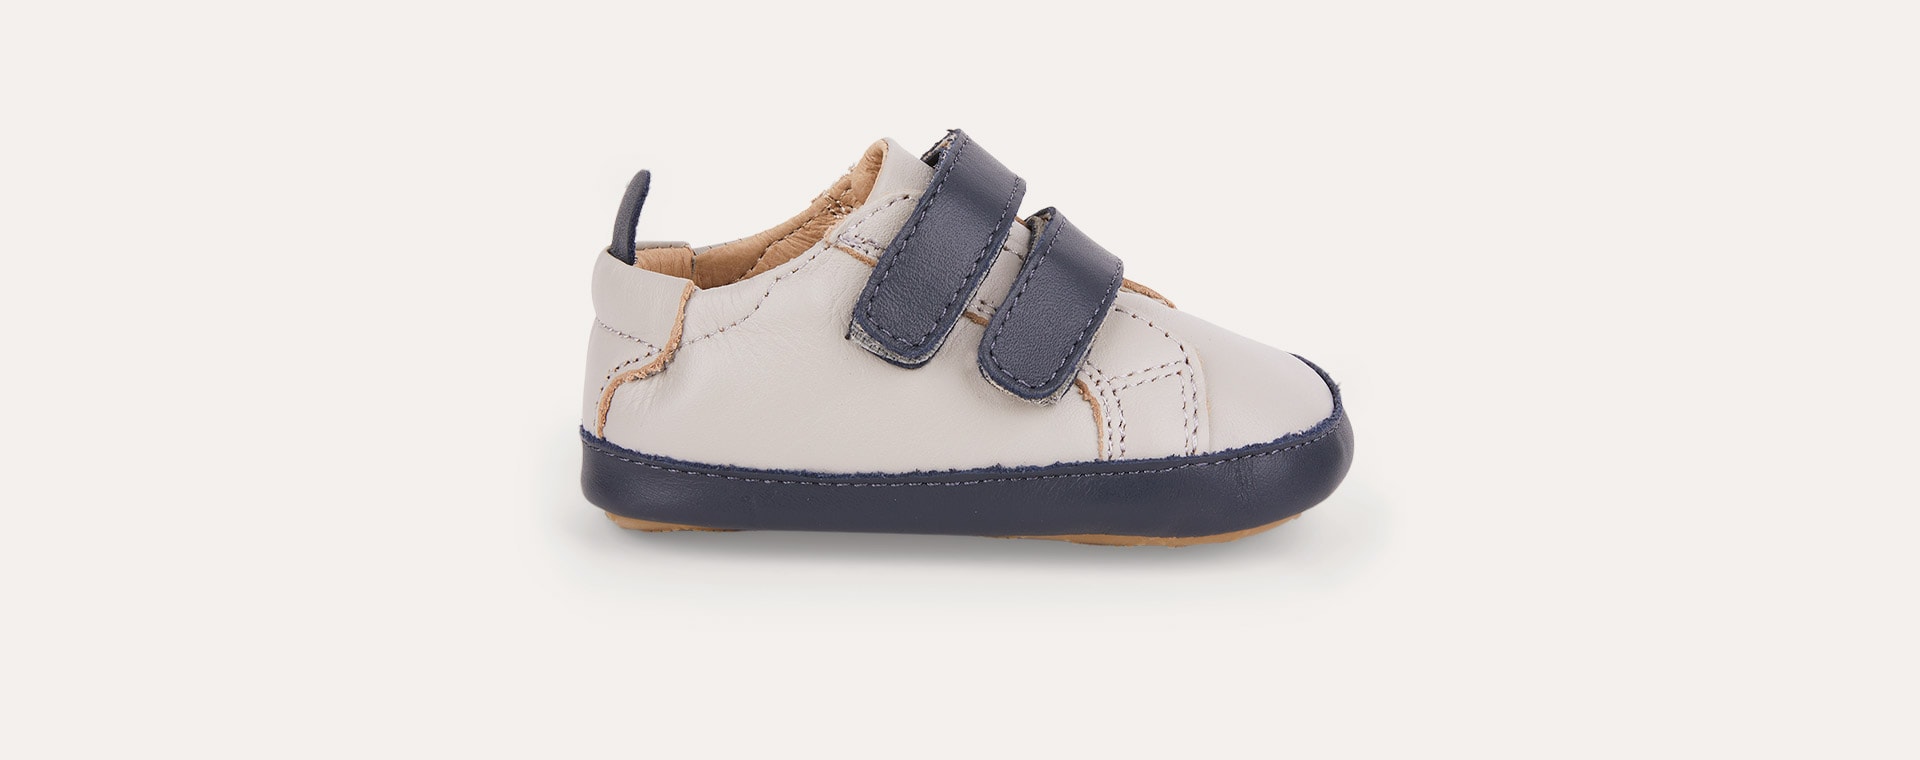 Gris / Navy old soles Eazy Market Soft sole Trainer